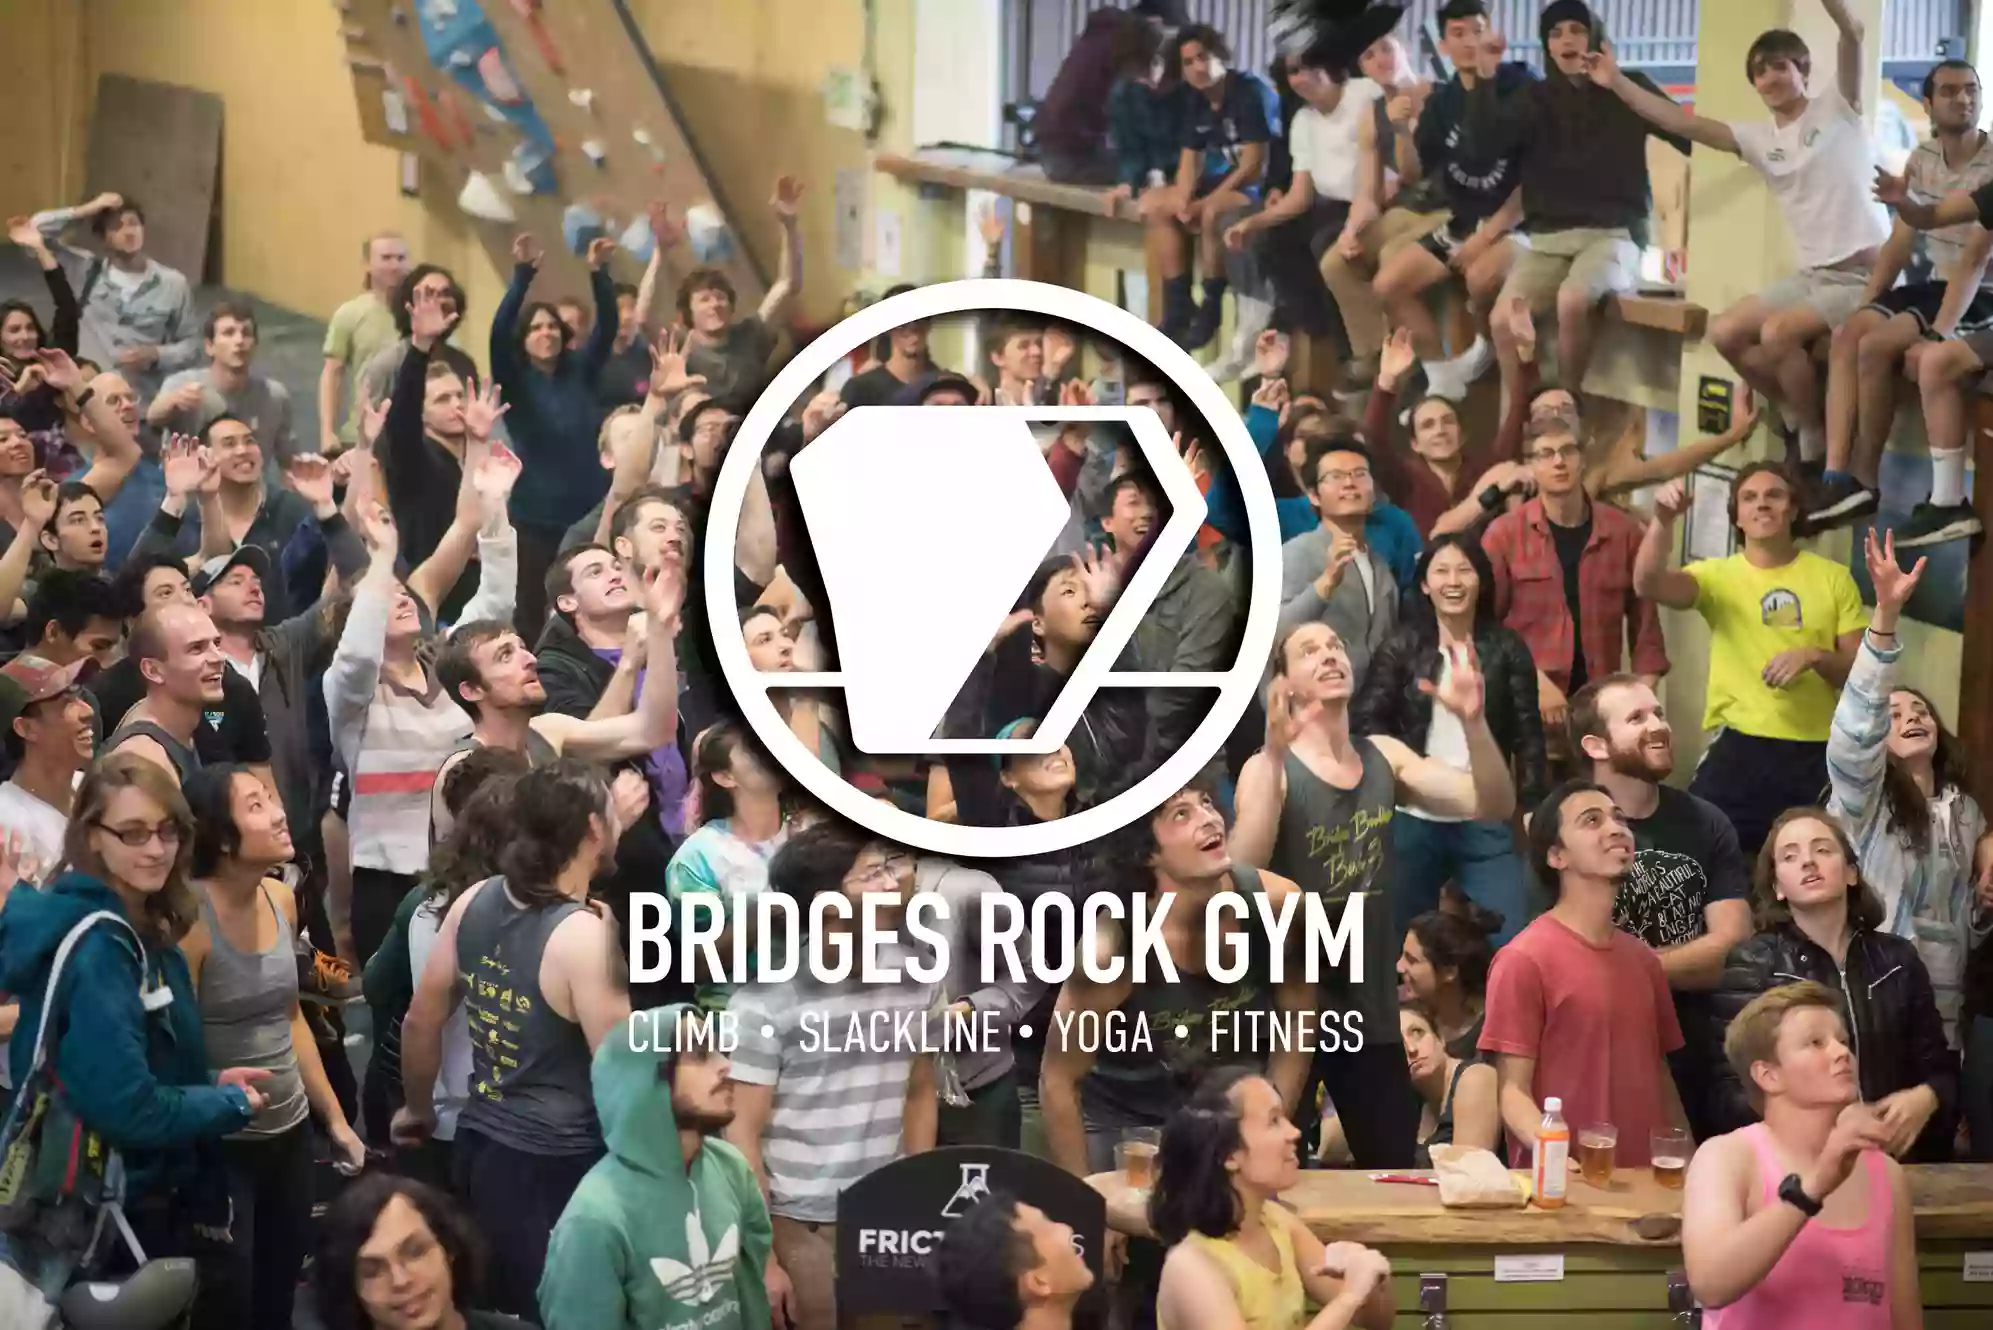 Bridges Rock Gym